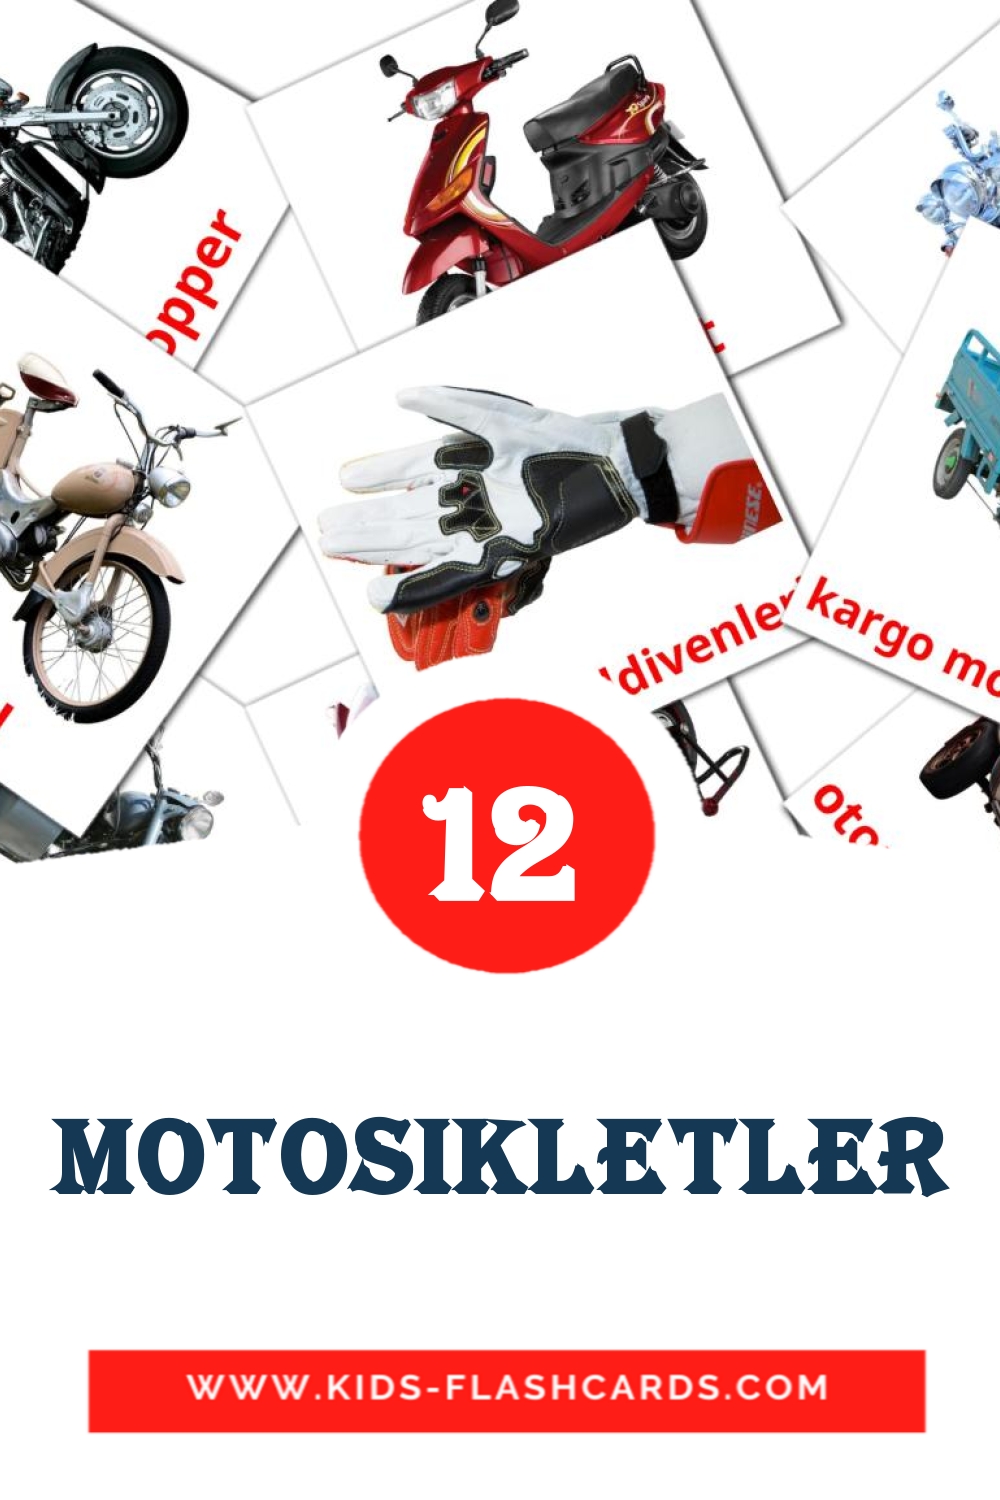 14 motosikletler Picture Cards for Kindergarden in turkish